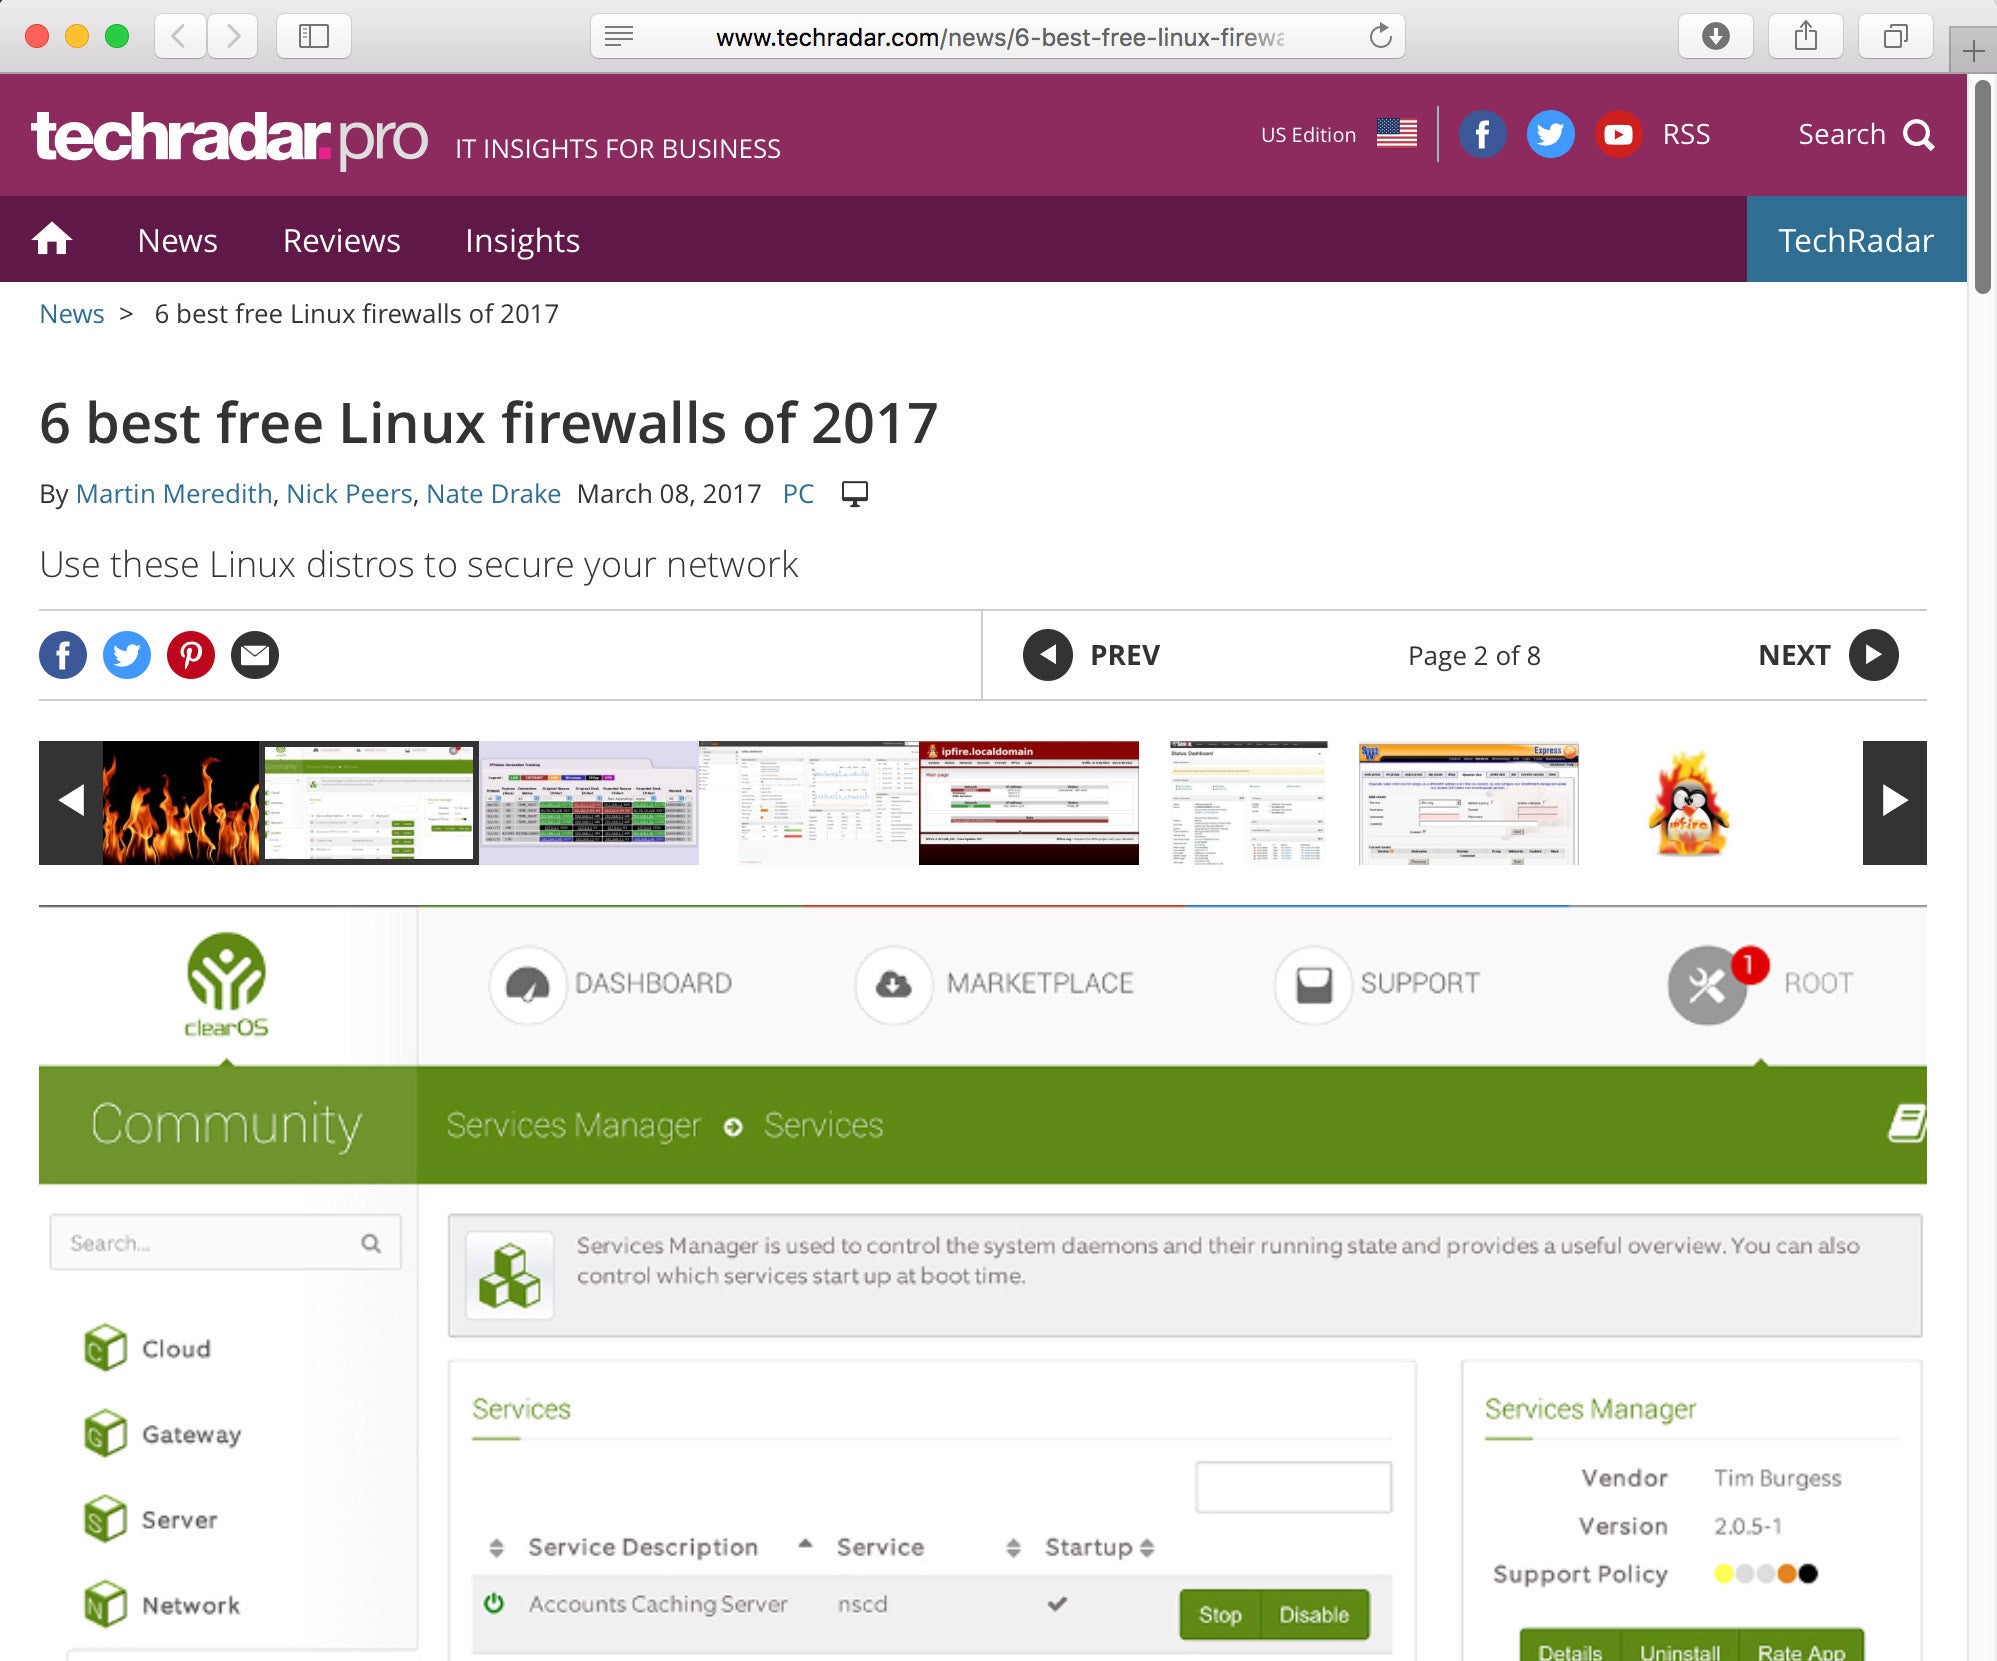 TechRadar ranks ClearOS No. 1 in list of 6 best free Linux firewalls of 2017